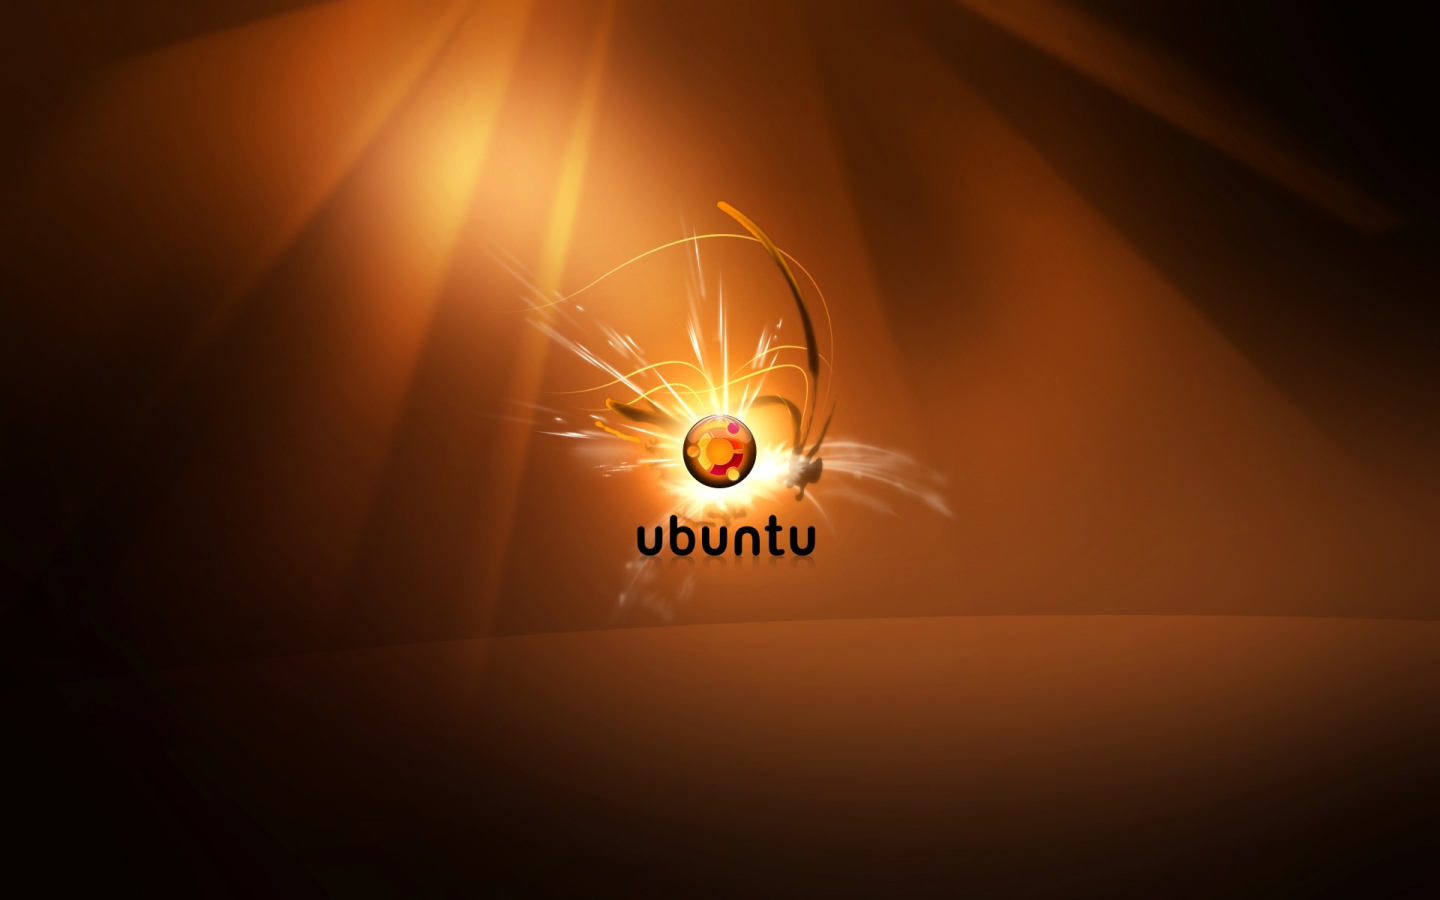 Creative Ubuntu Design for 1440 x 900 widescreen resolution